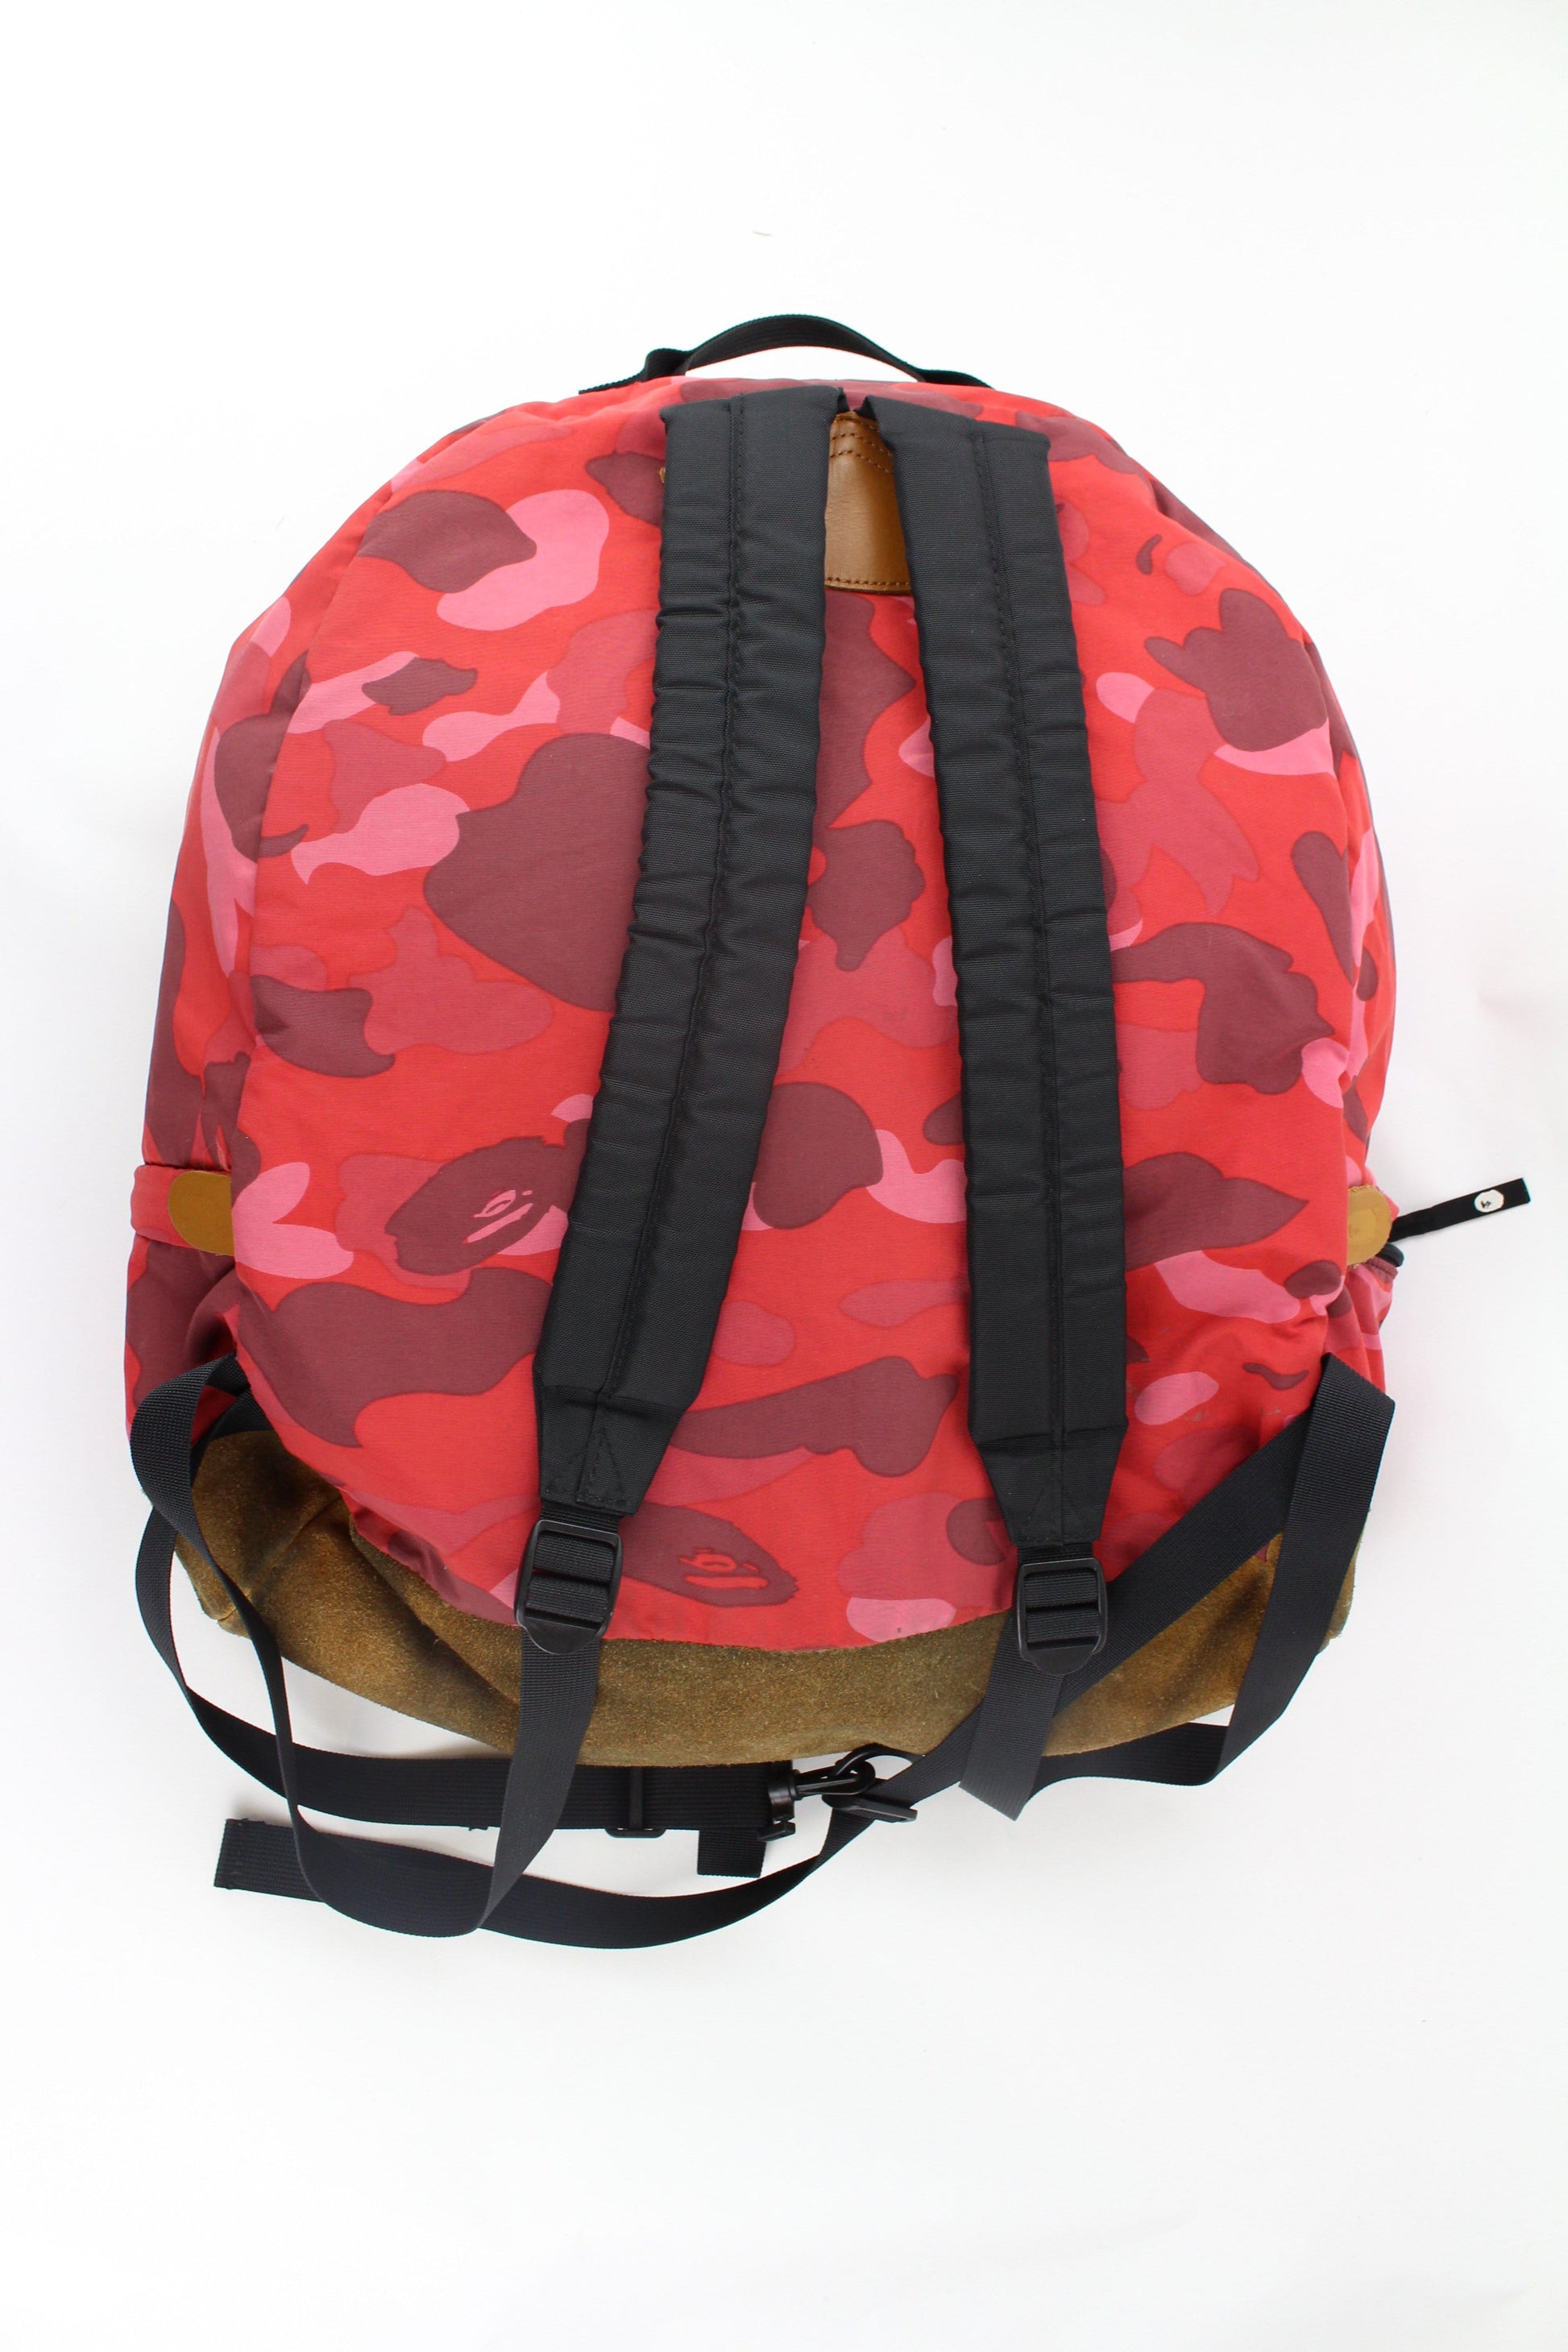 bape red camo backpack - SaruGeneral